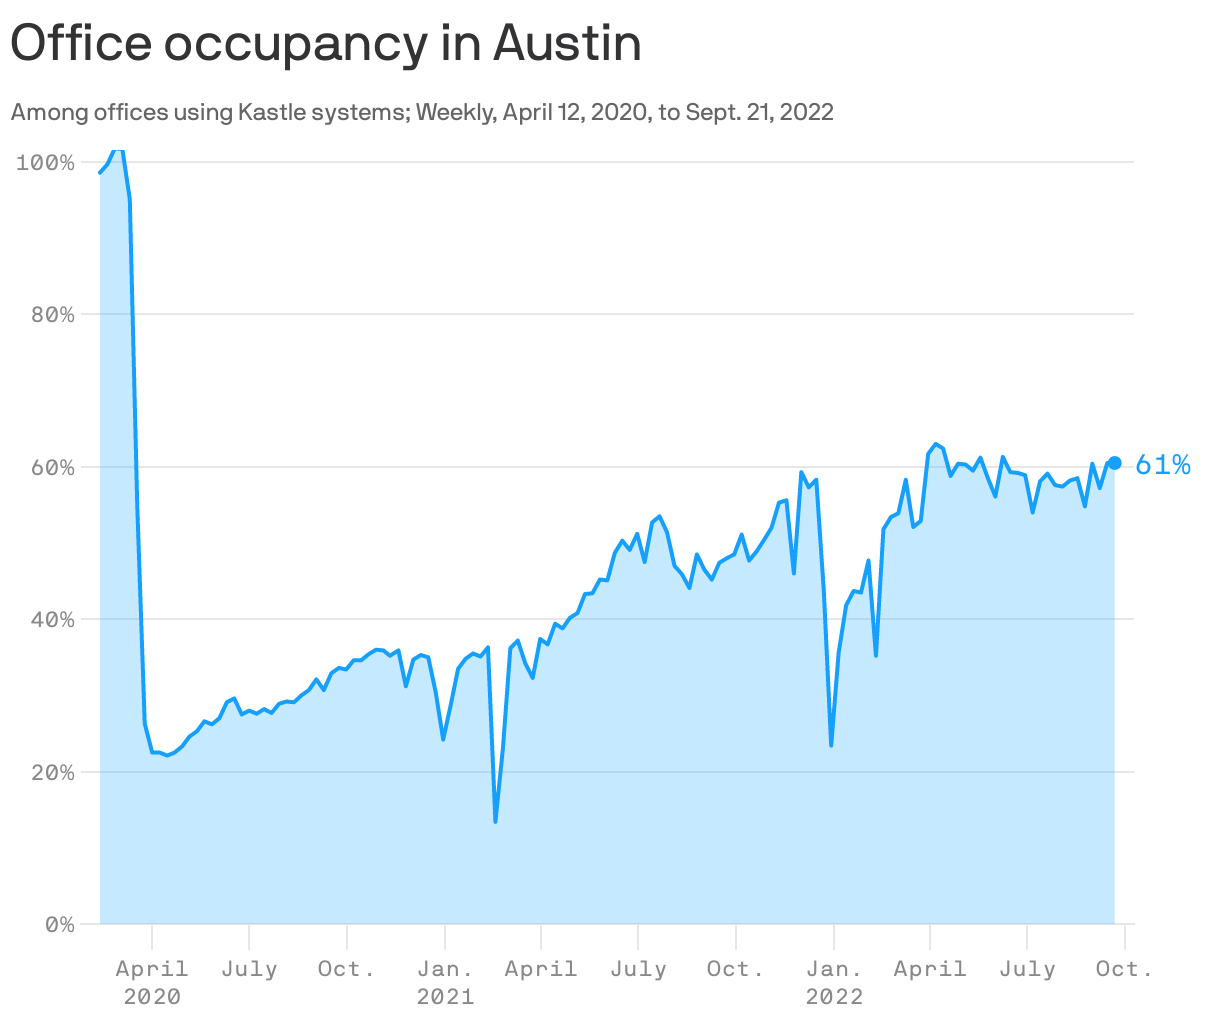 Office occupancy in Austin